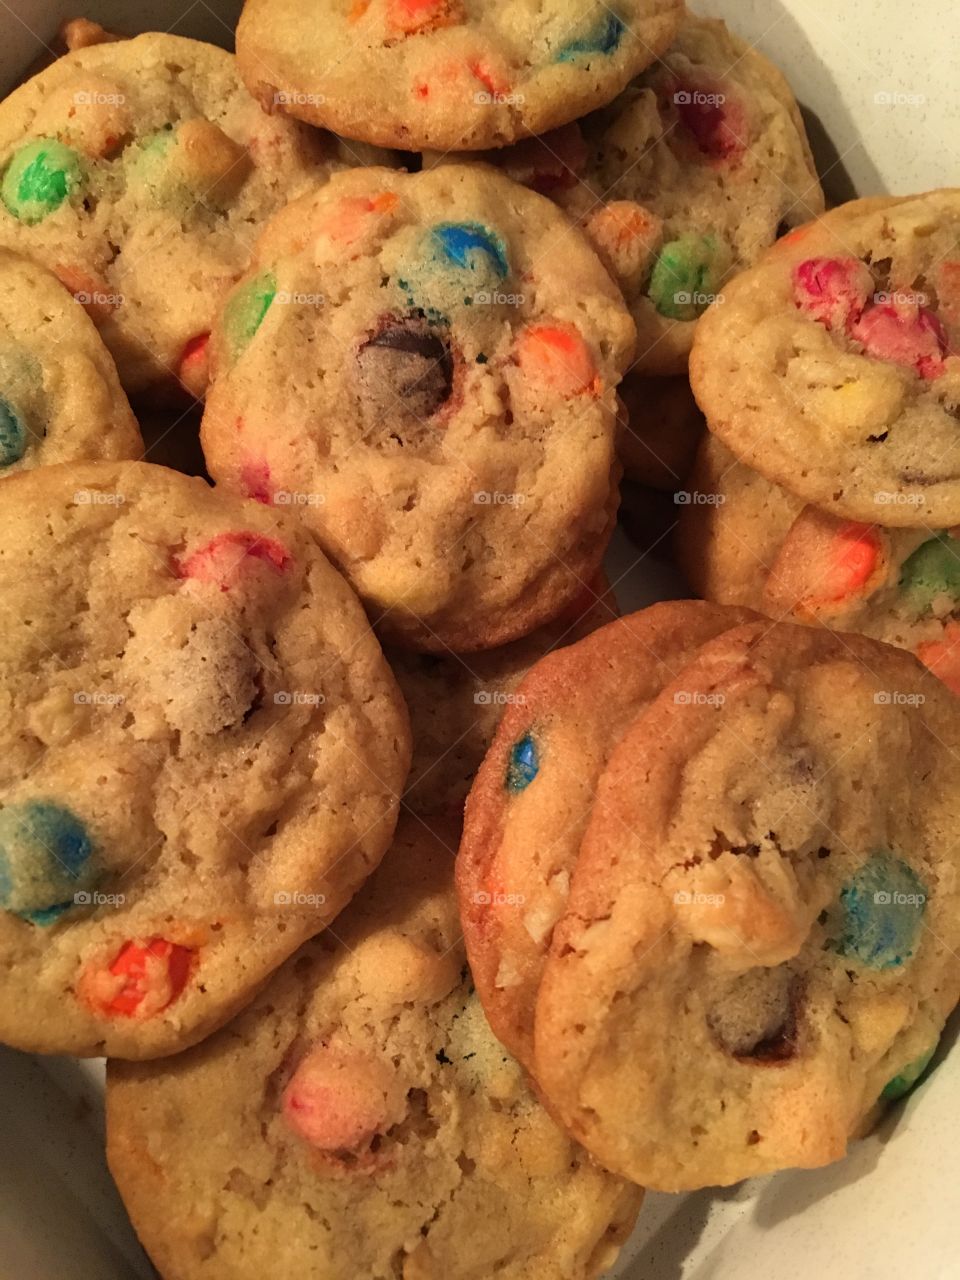 Yummy m & m cookies!